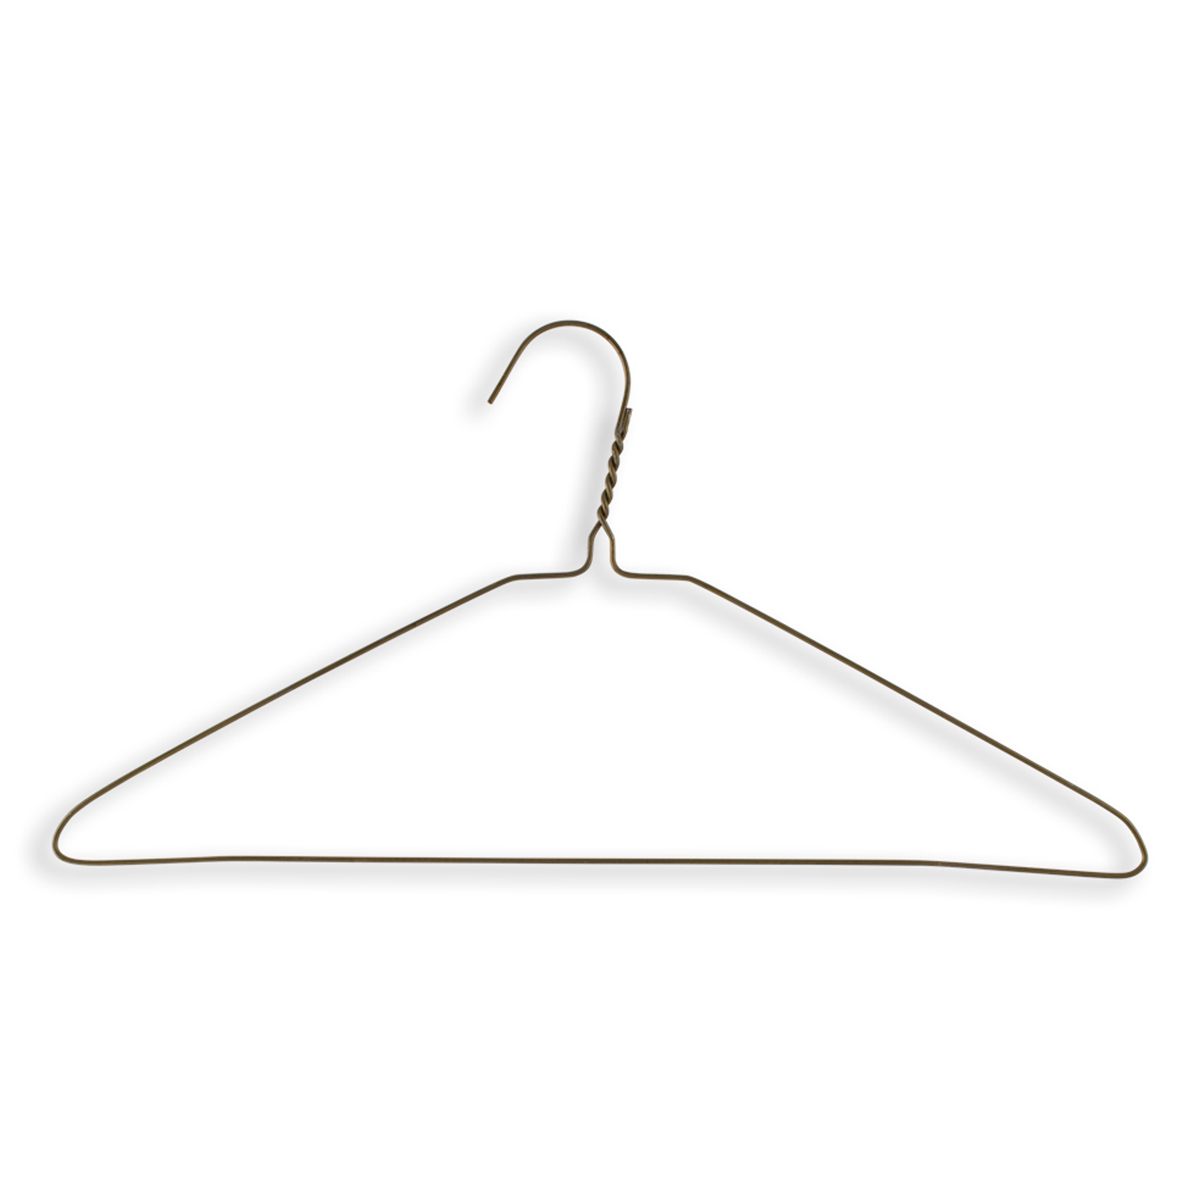 Commercial Grade Metal Suit Hangers - 16 Length/ 13 Gauge - 500/Box - Gold  - Cleaner's Supply